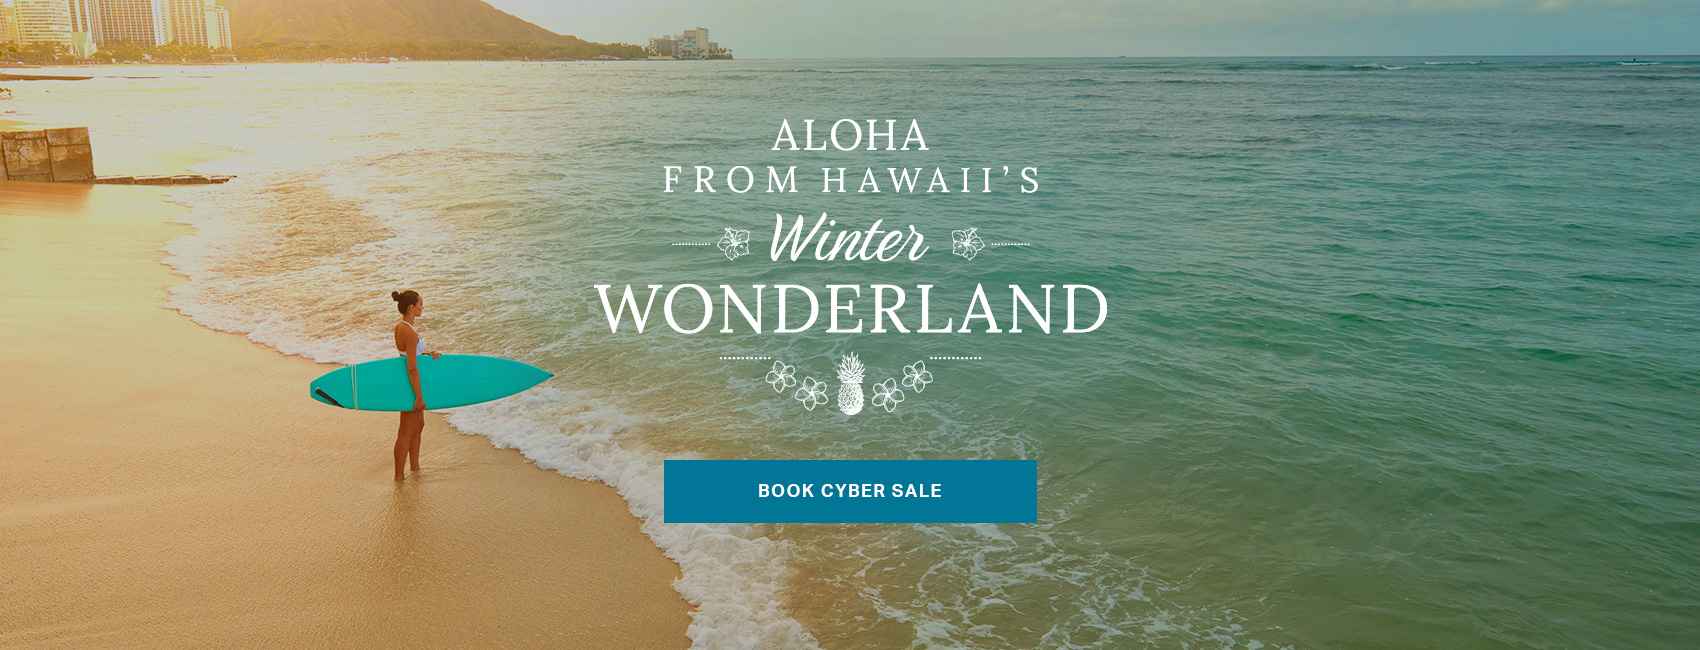 Aloha from Hawaii's Winter Wonderland. Book Cyber Sale.